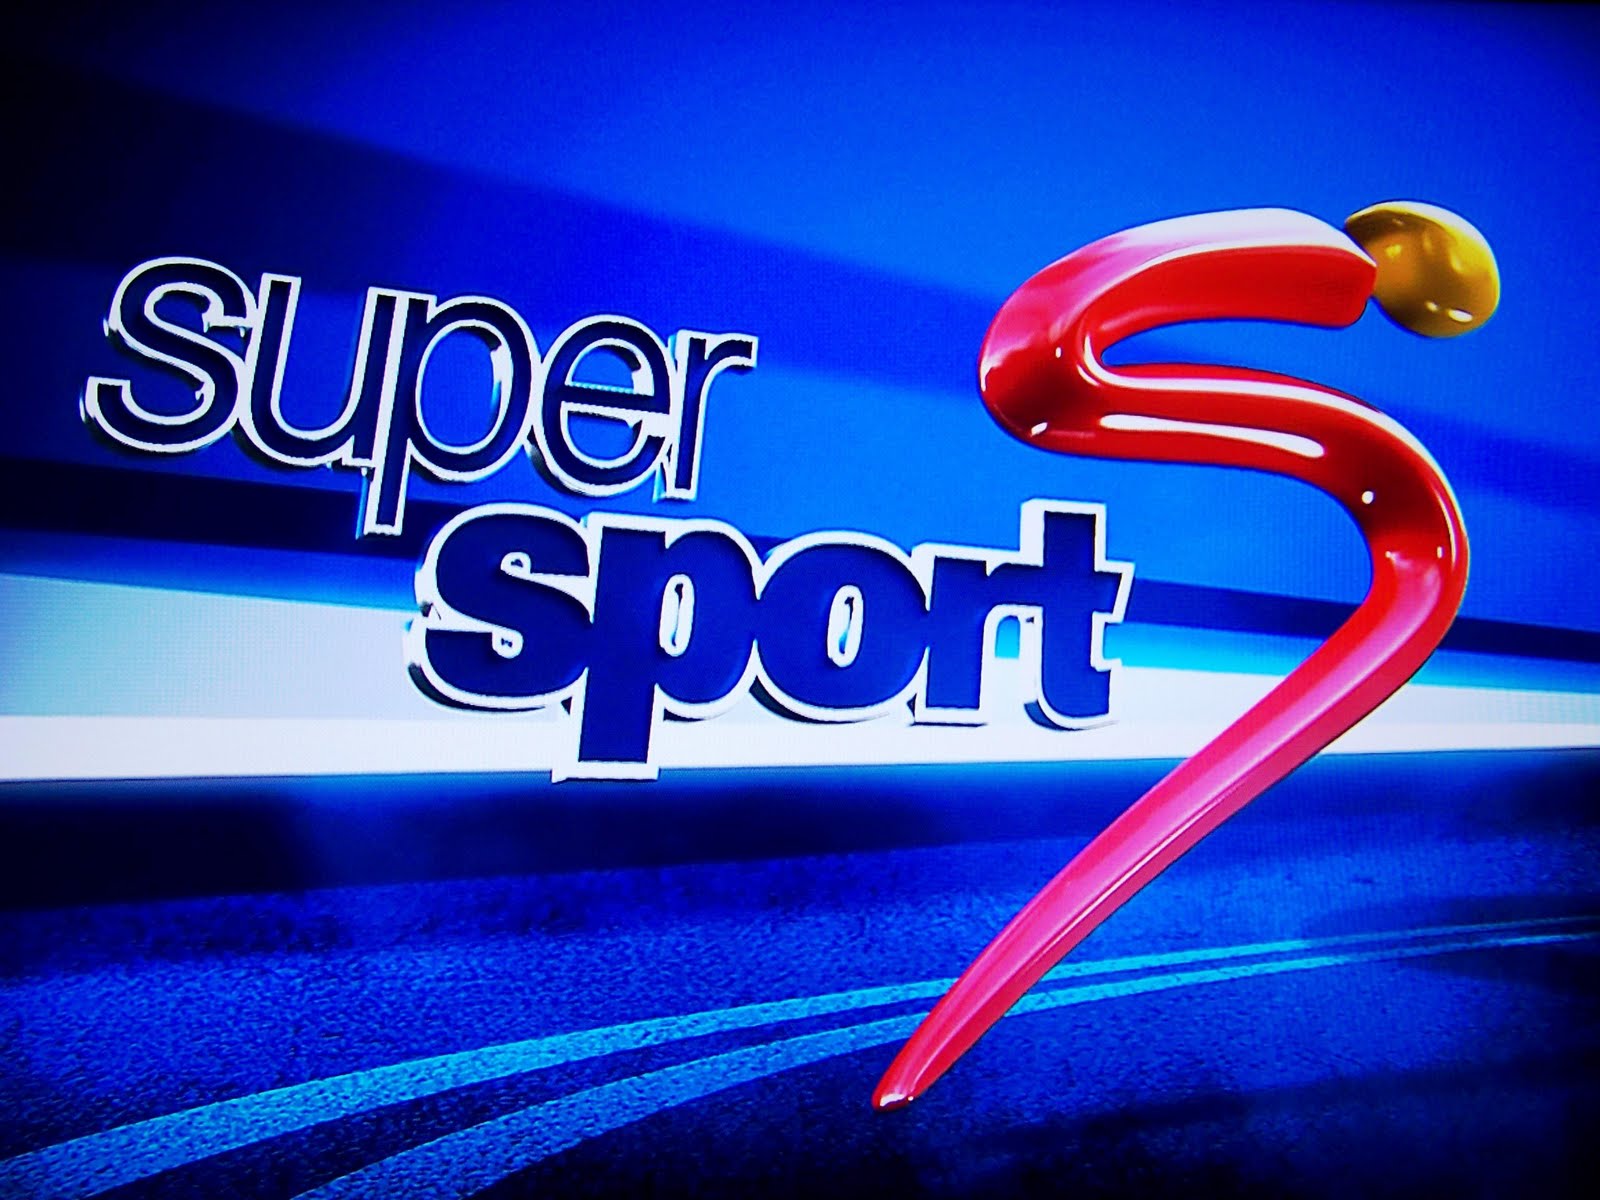 Super Sports Logo